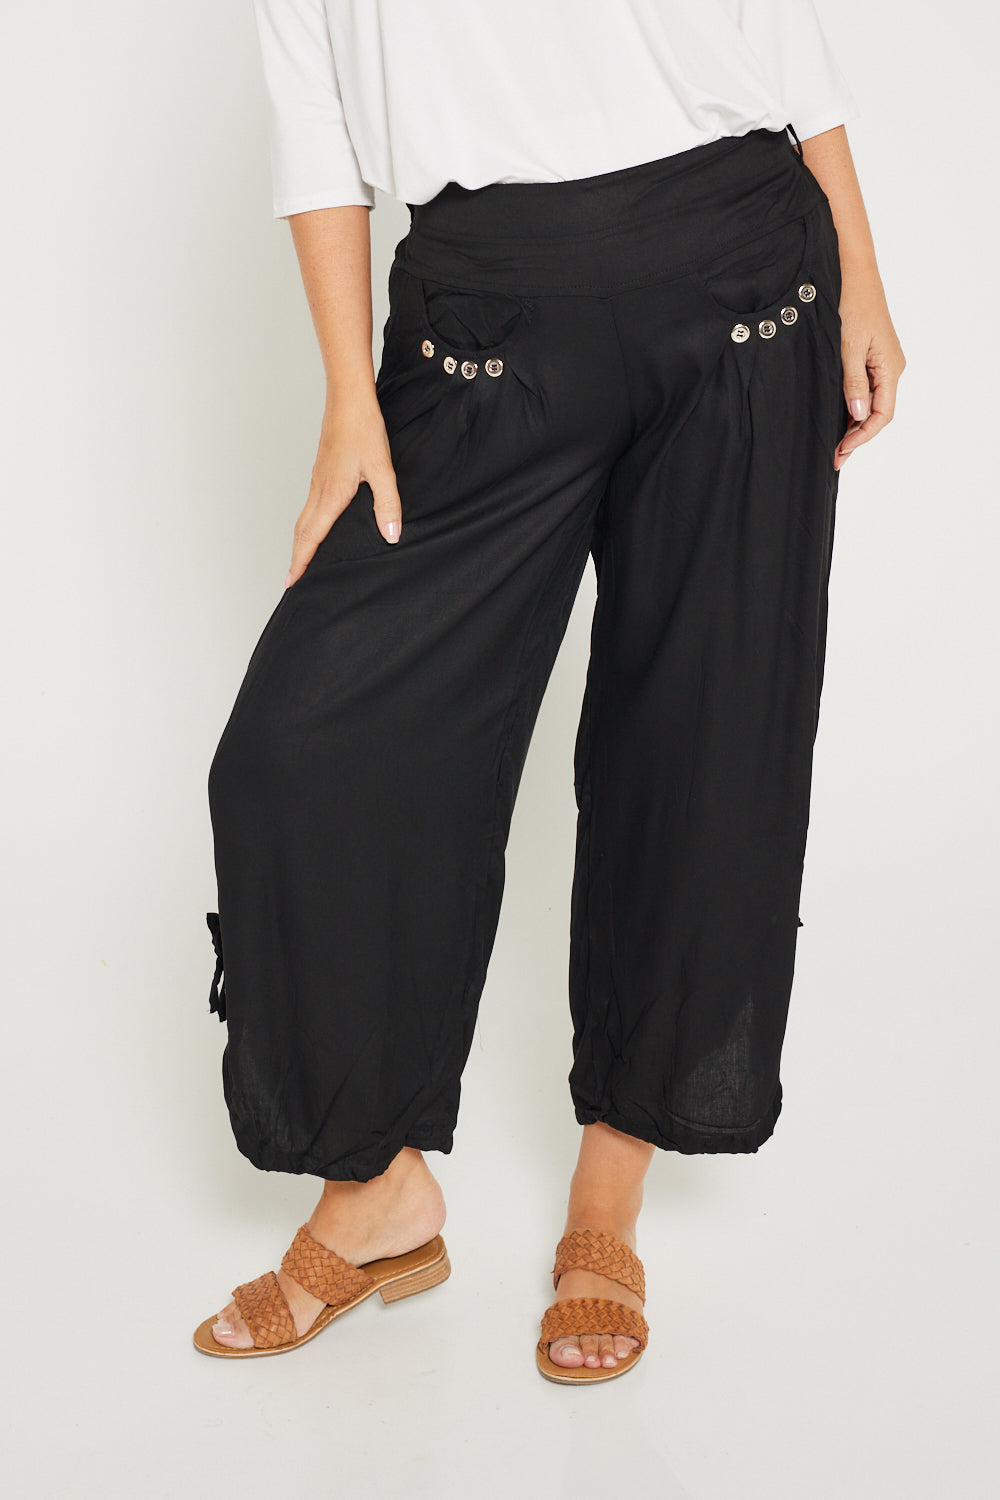 Travel Pants by Cordelia St - Black – TULIO Fashion